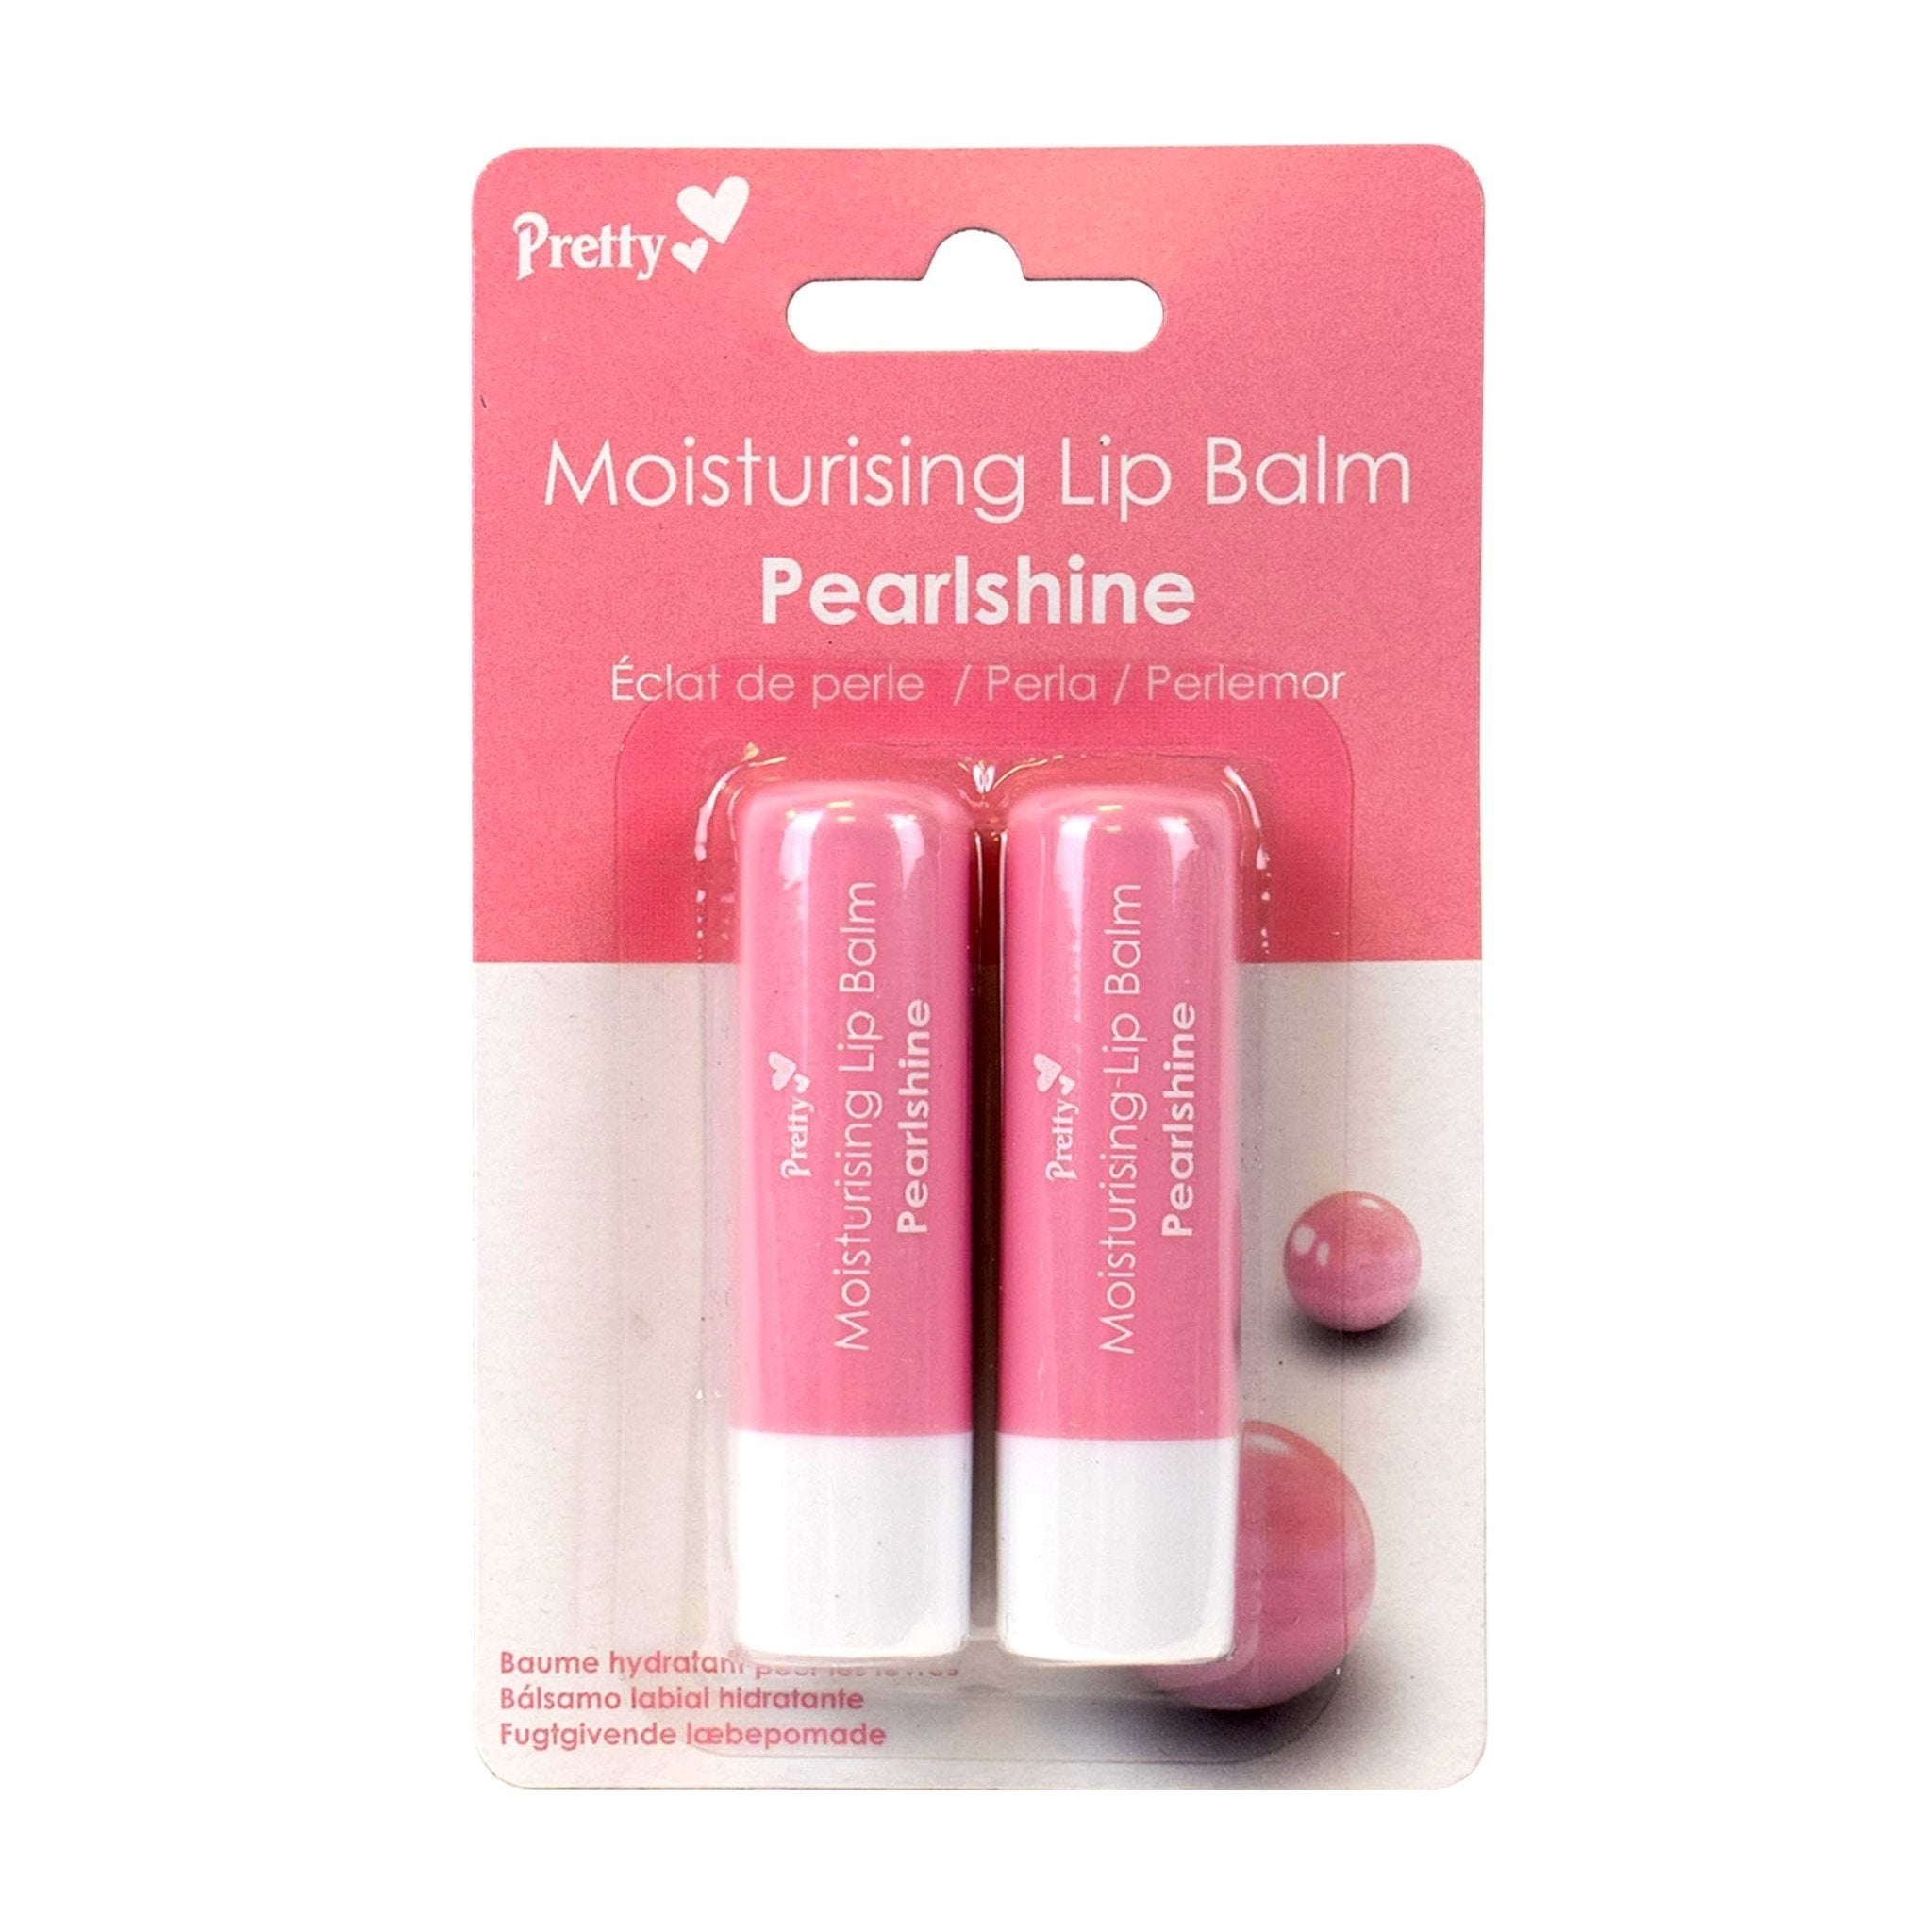 Pretty Moisturizing Lip Balm Pearlshine 4.3g